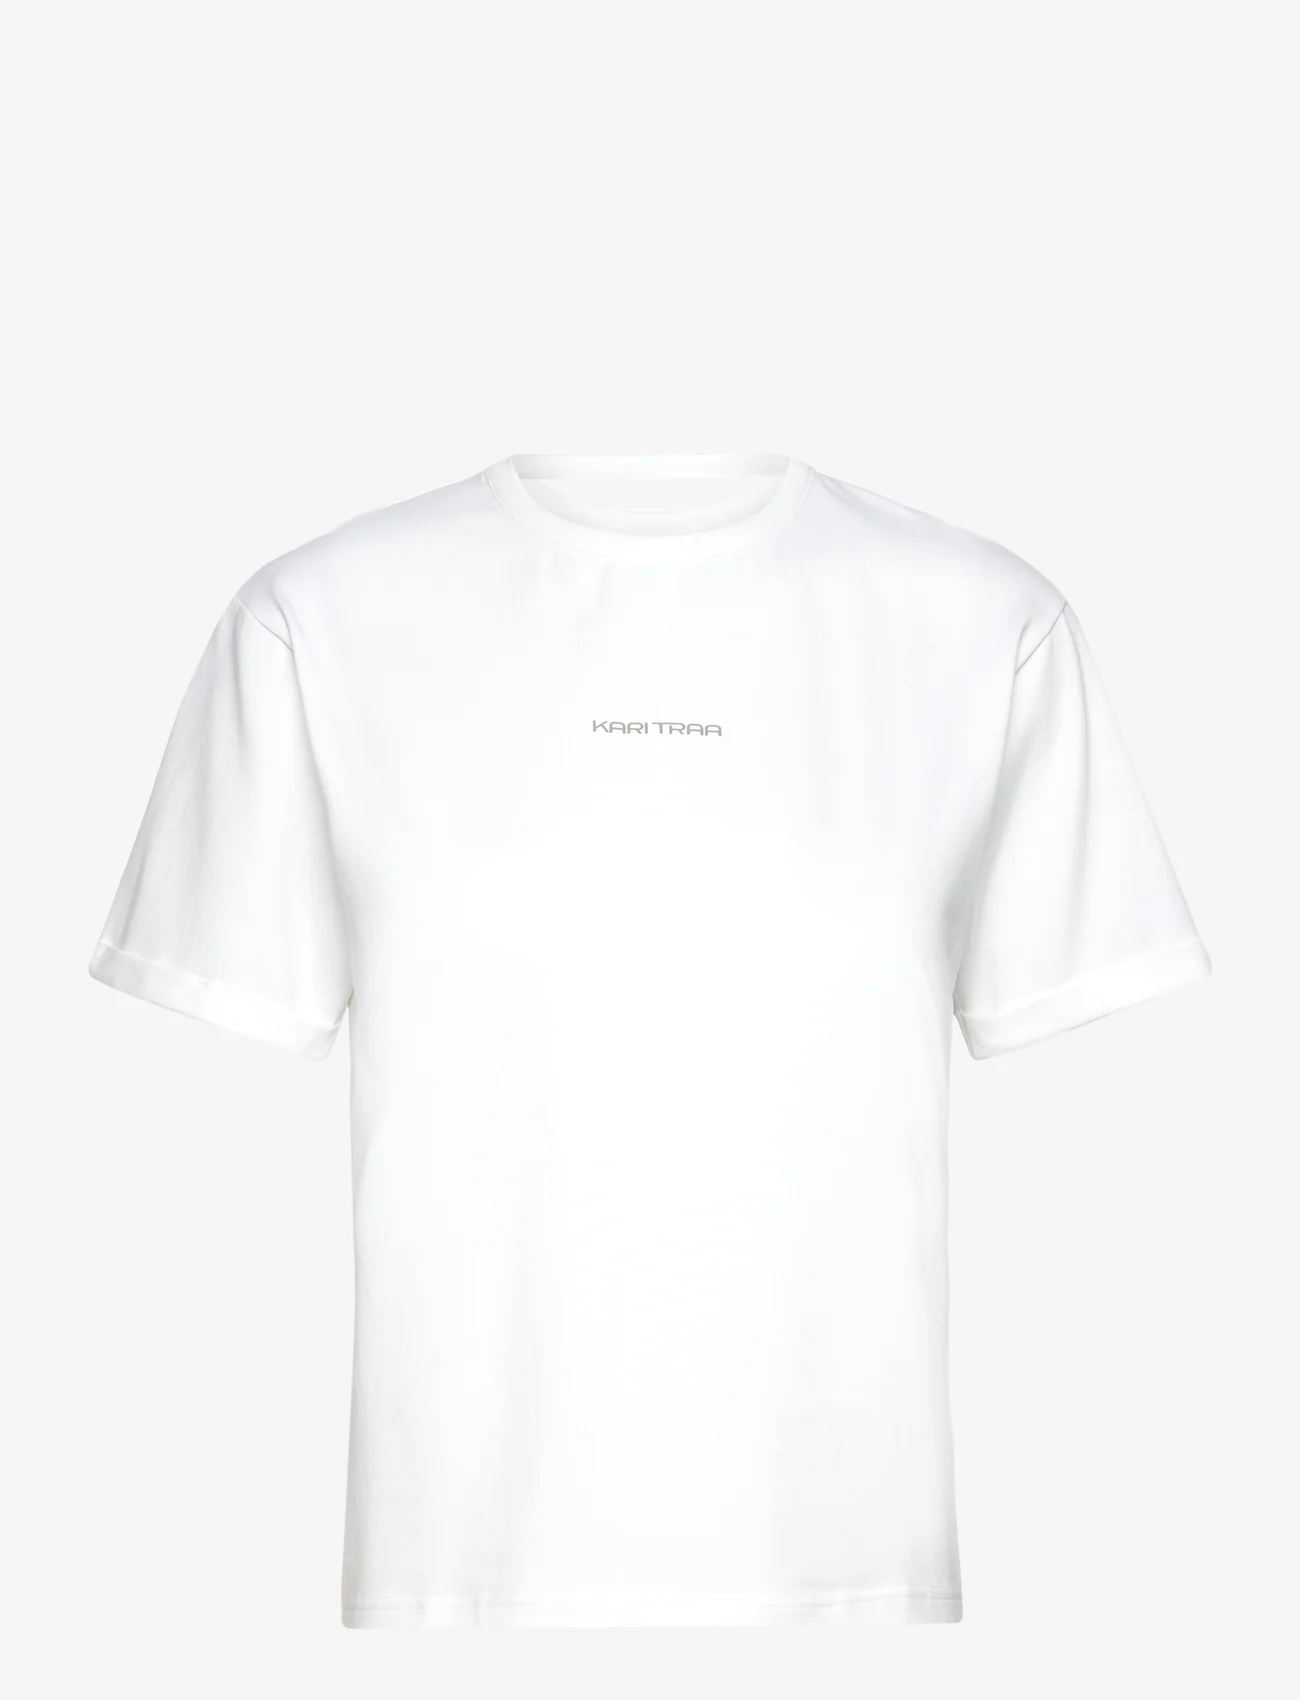 Kari Traa - PAULINE TEE - t-shirts - bwhite - 0